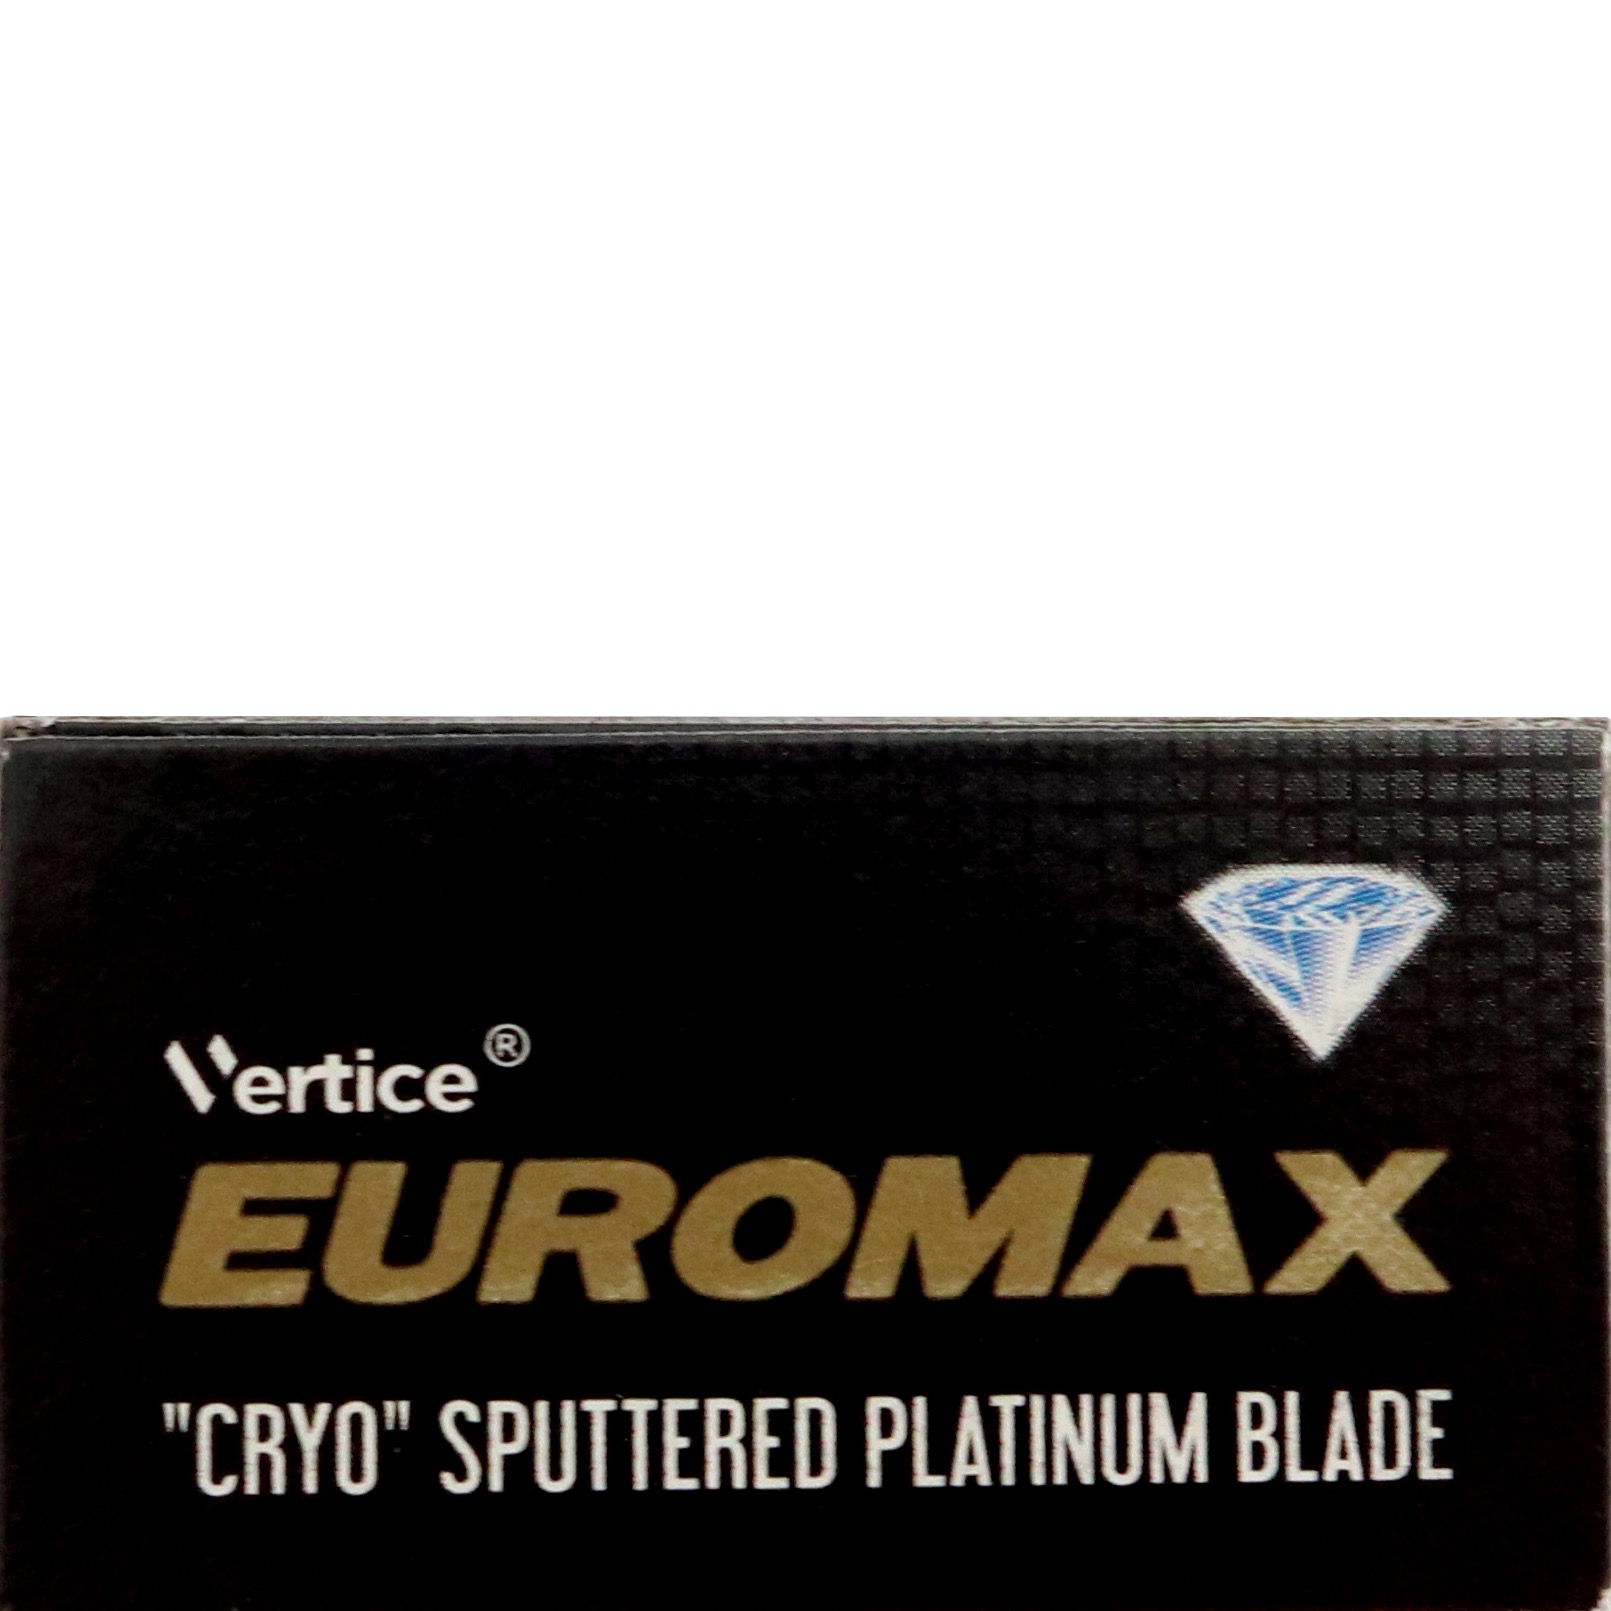 Euromax Cryo Sputtered Platinum Double edge blades - 2.1 - DEB-EUROMAX-CRYO